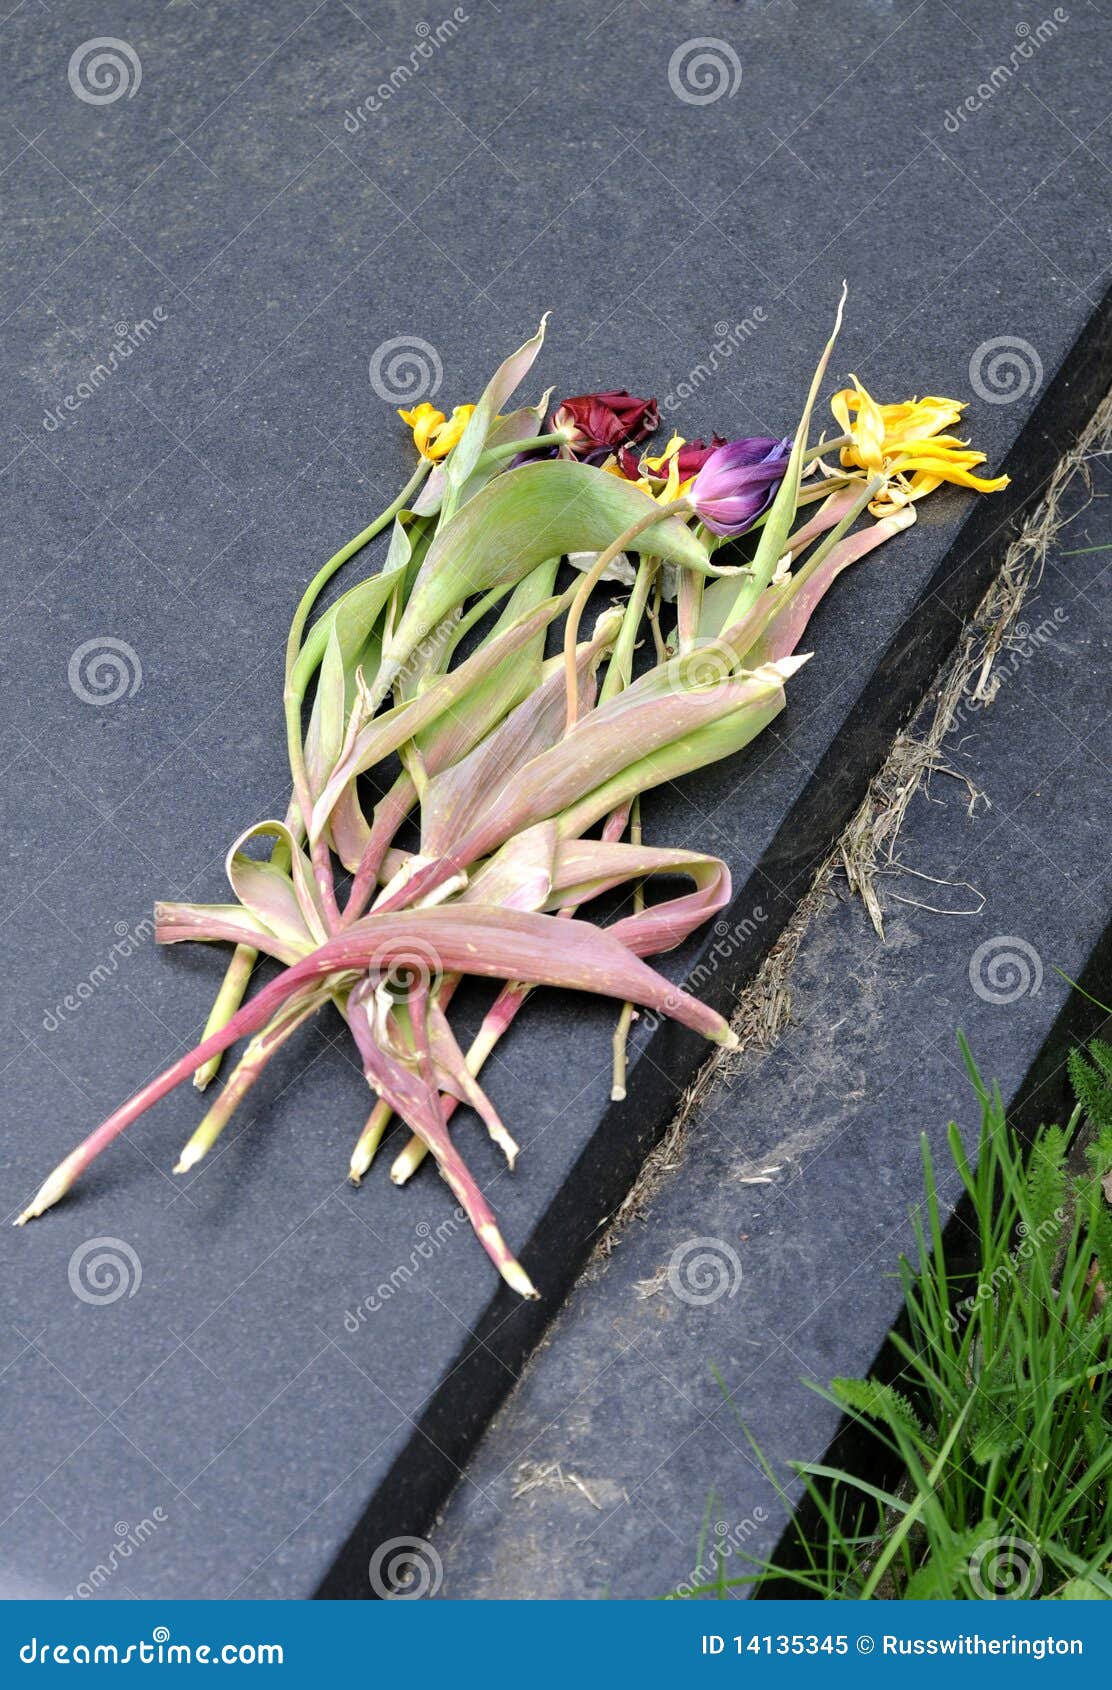 wilted flowers on gravestone